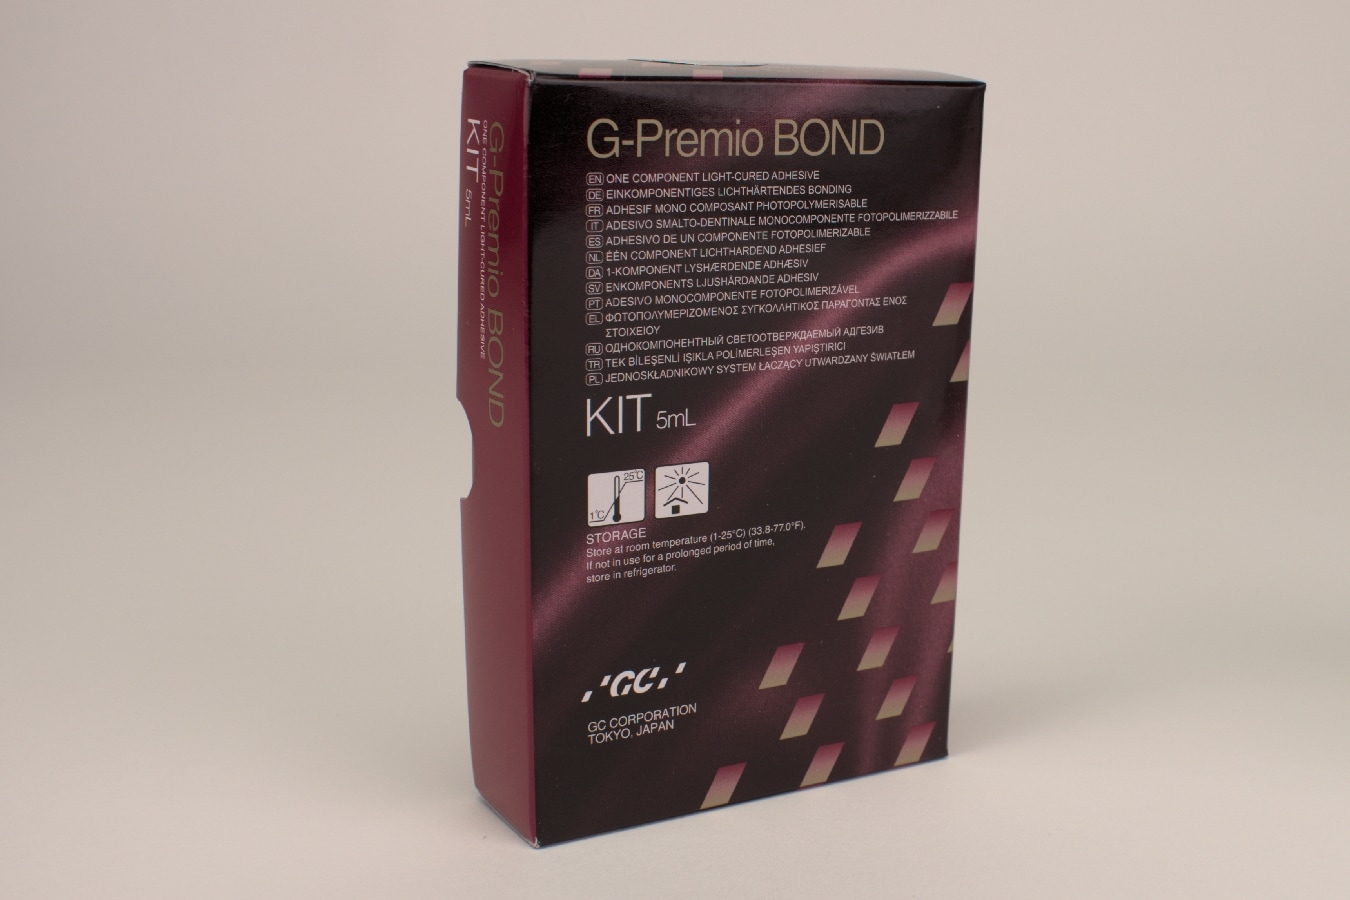 G-Premio Bond 5ml Kit